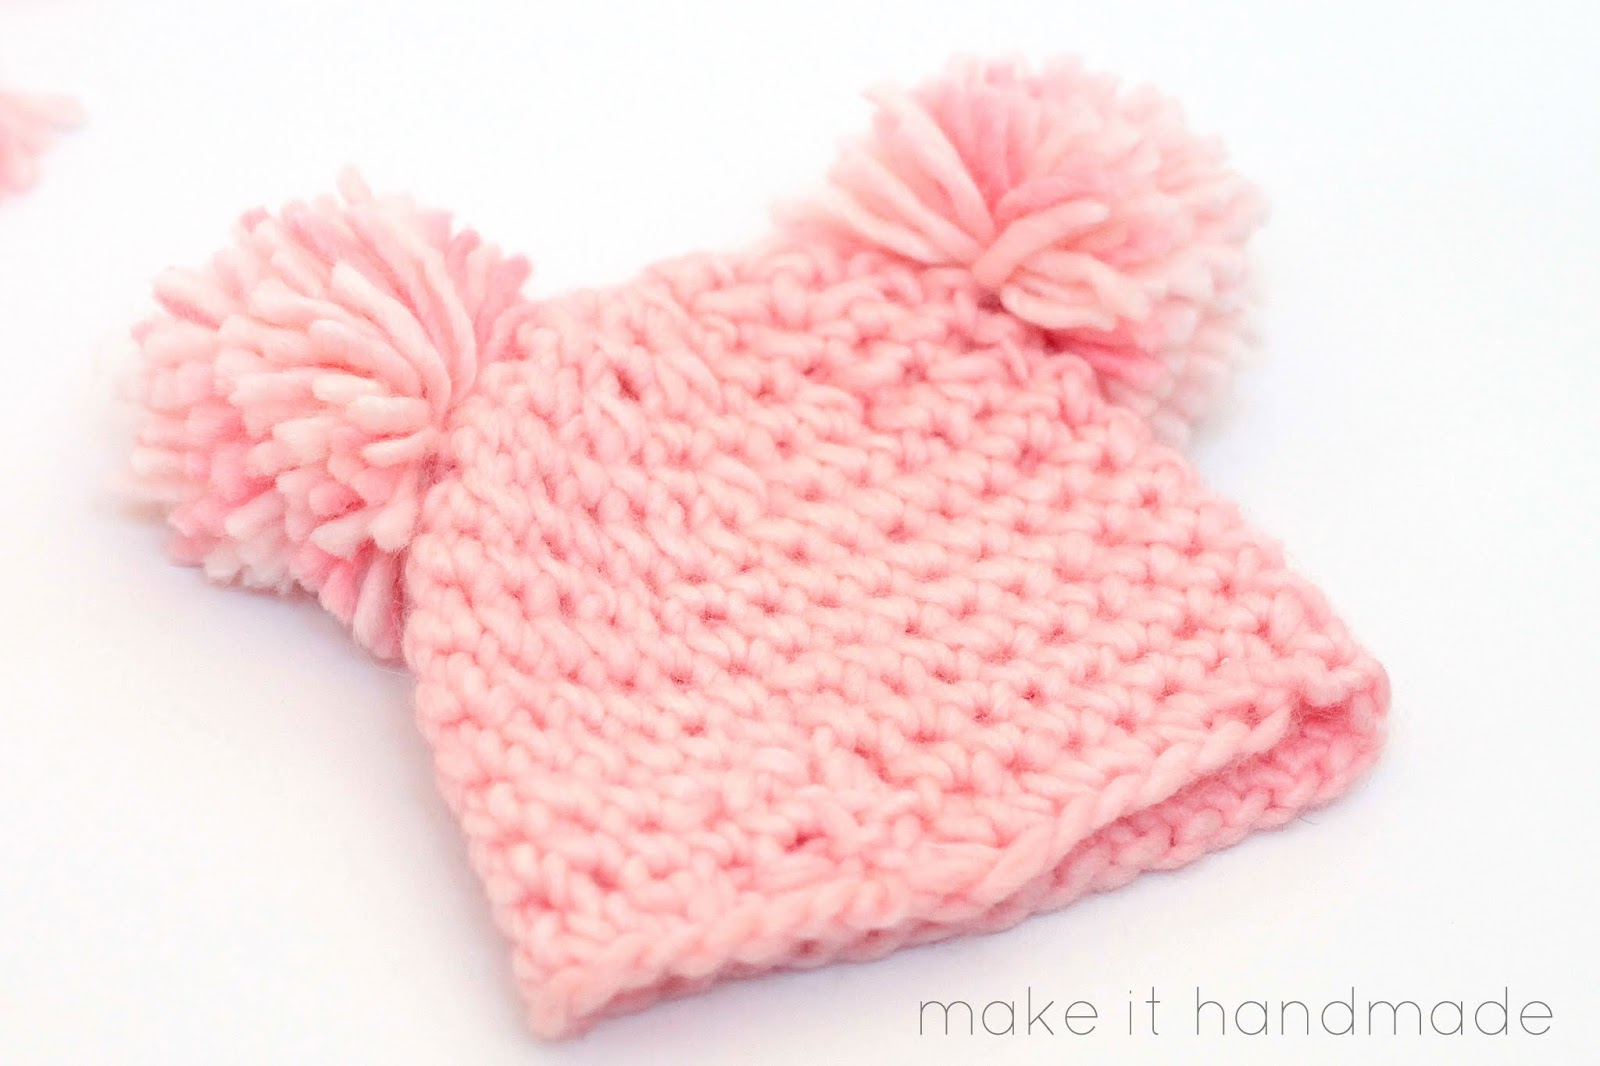 Crochet Newborn Hat Pattern Make It Handmade The Bubble Gum Newborn Hat Free Pattern